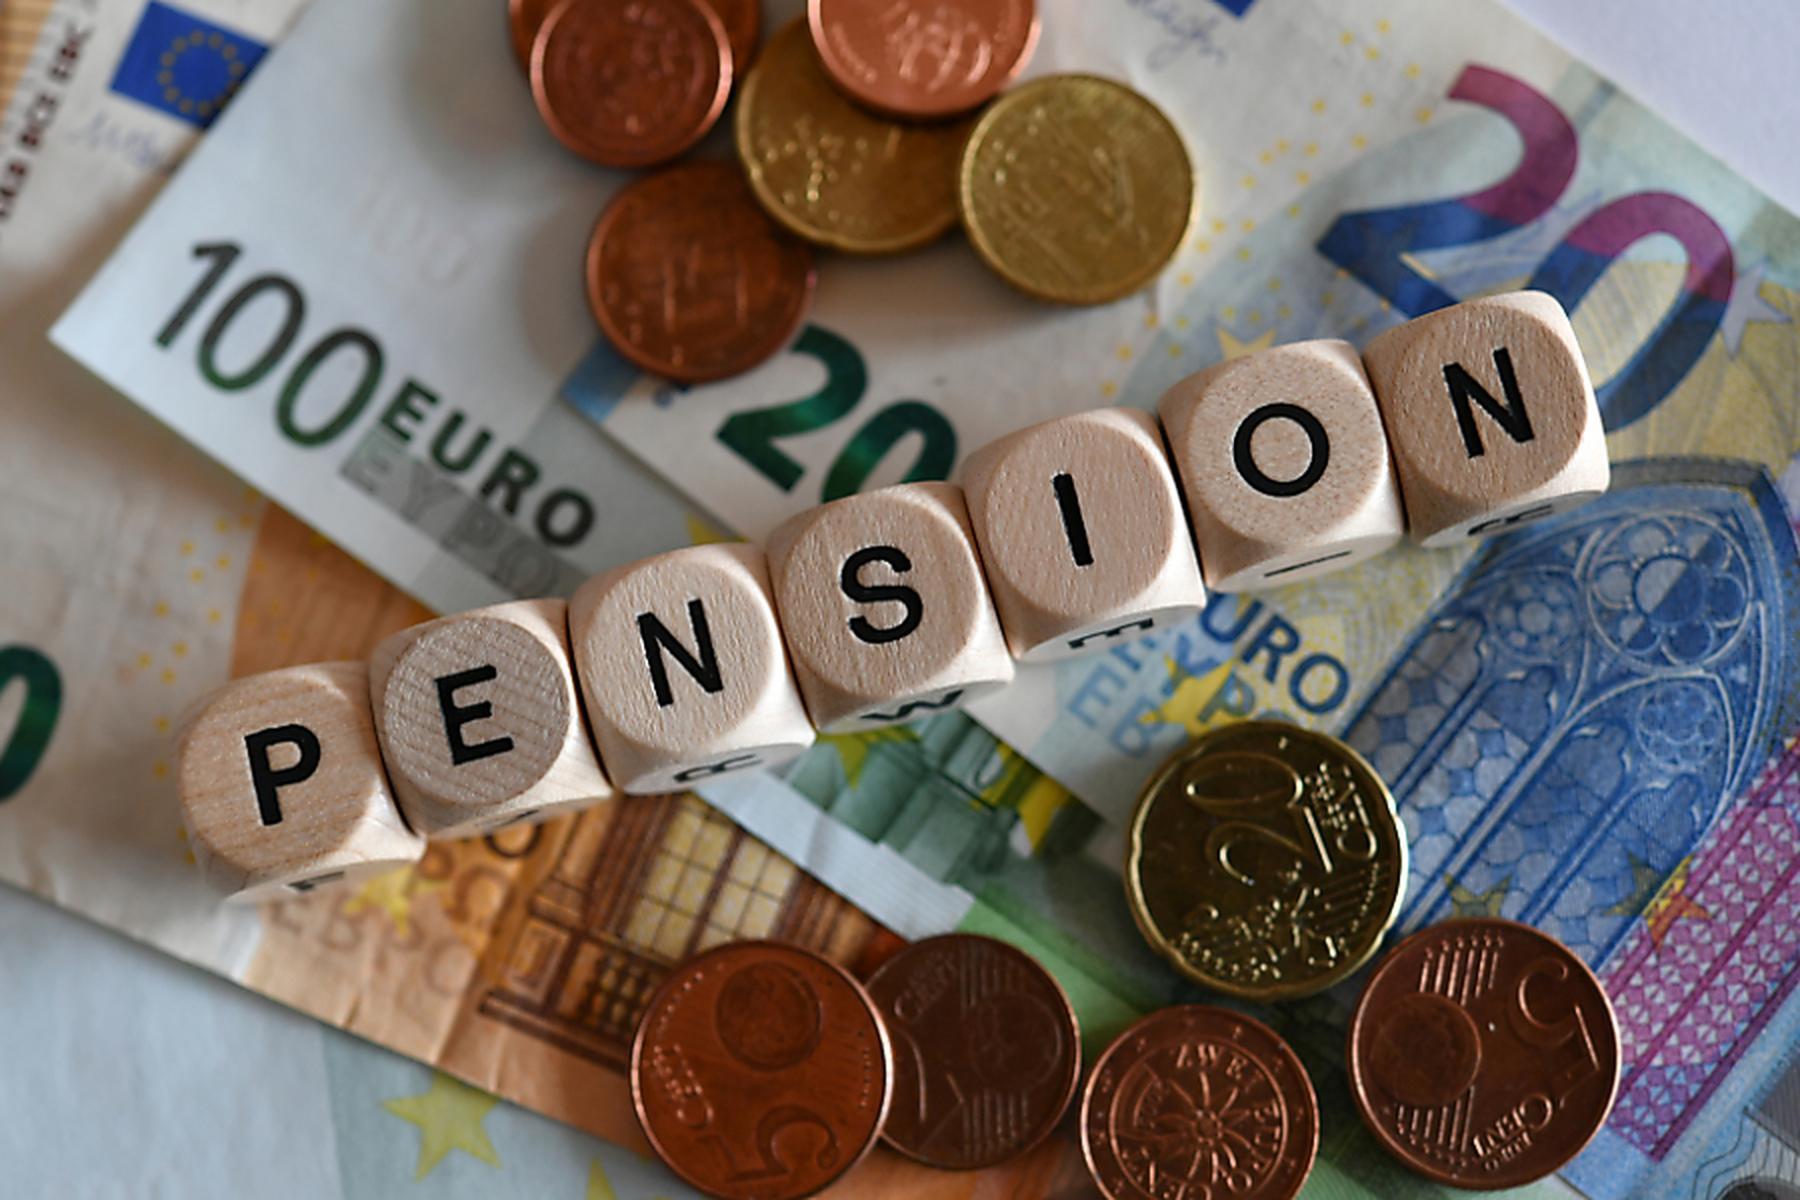 Wien: Pensionen dürften um 4,6 Prozent steigen